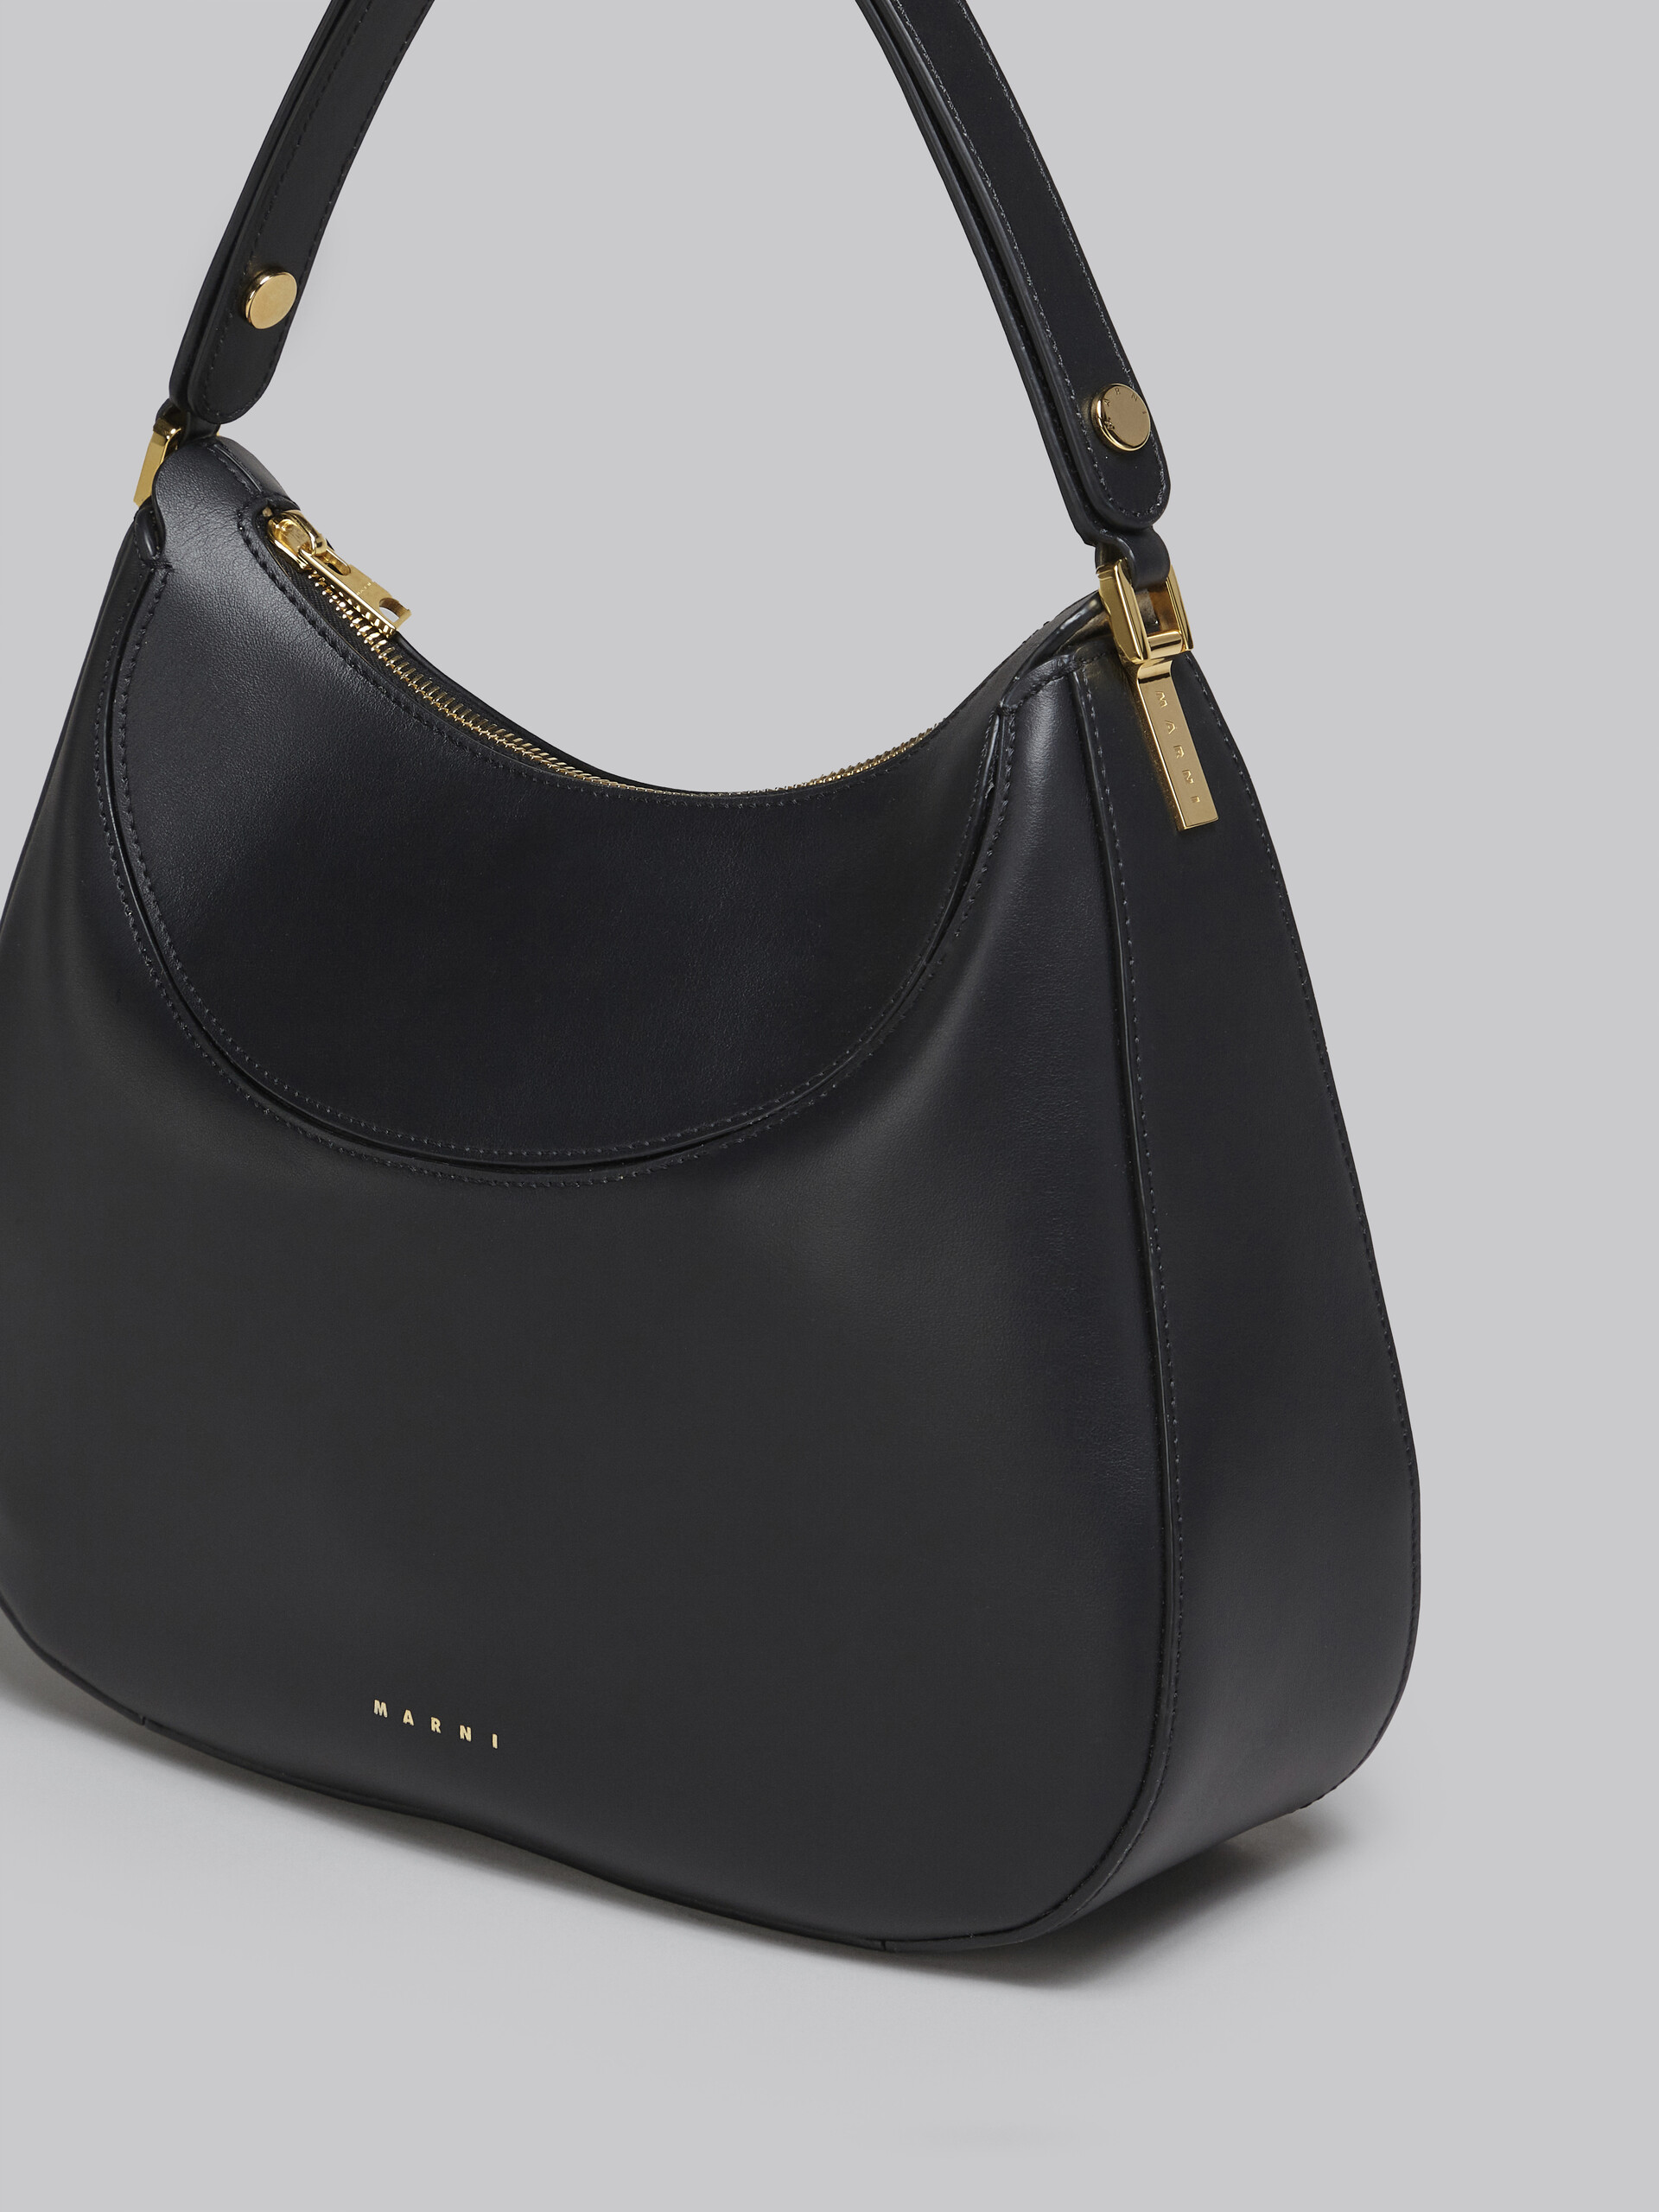 Milano large bag in black leather - Handbag - Image 5